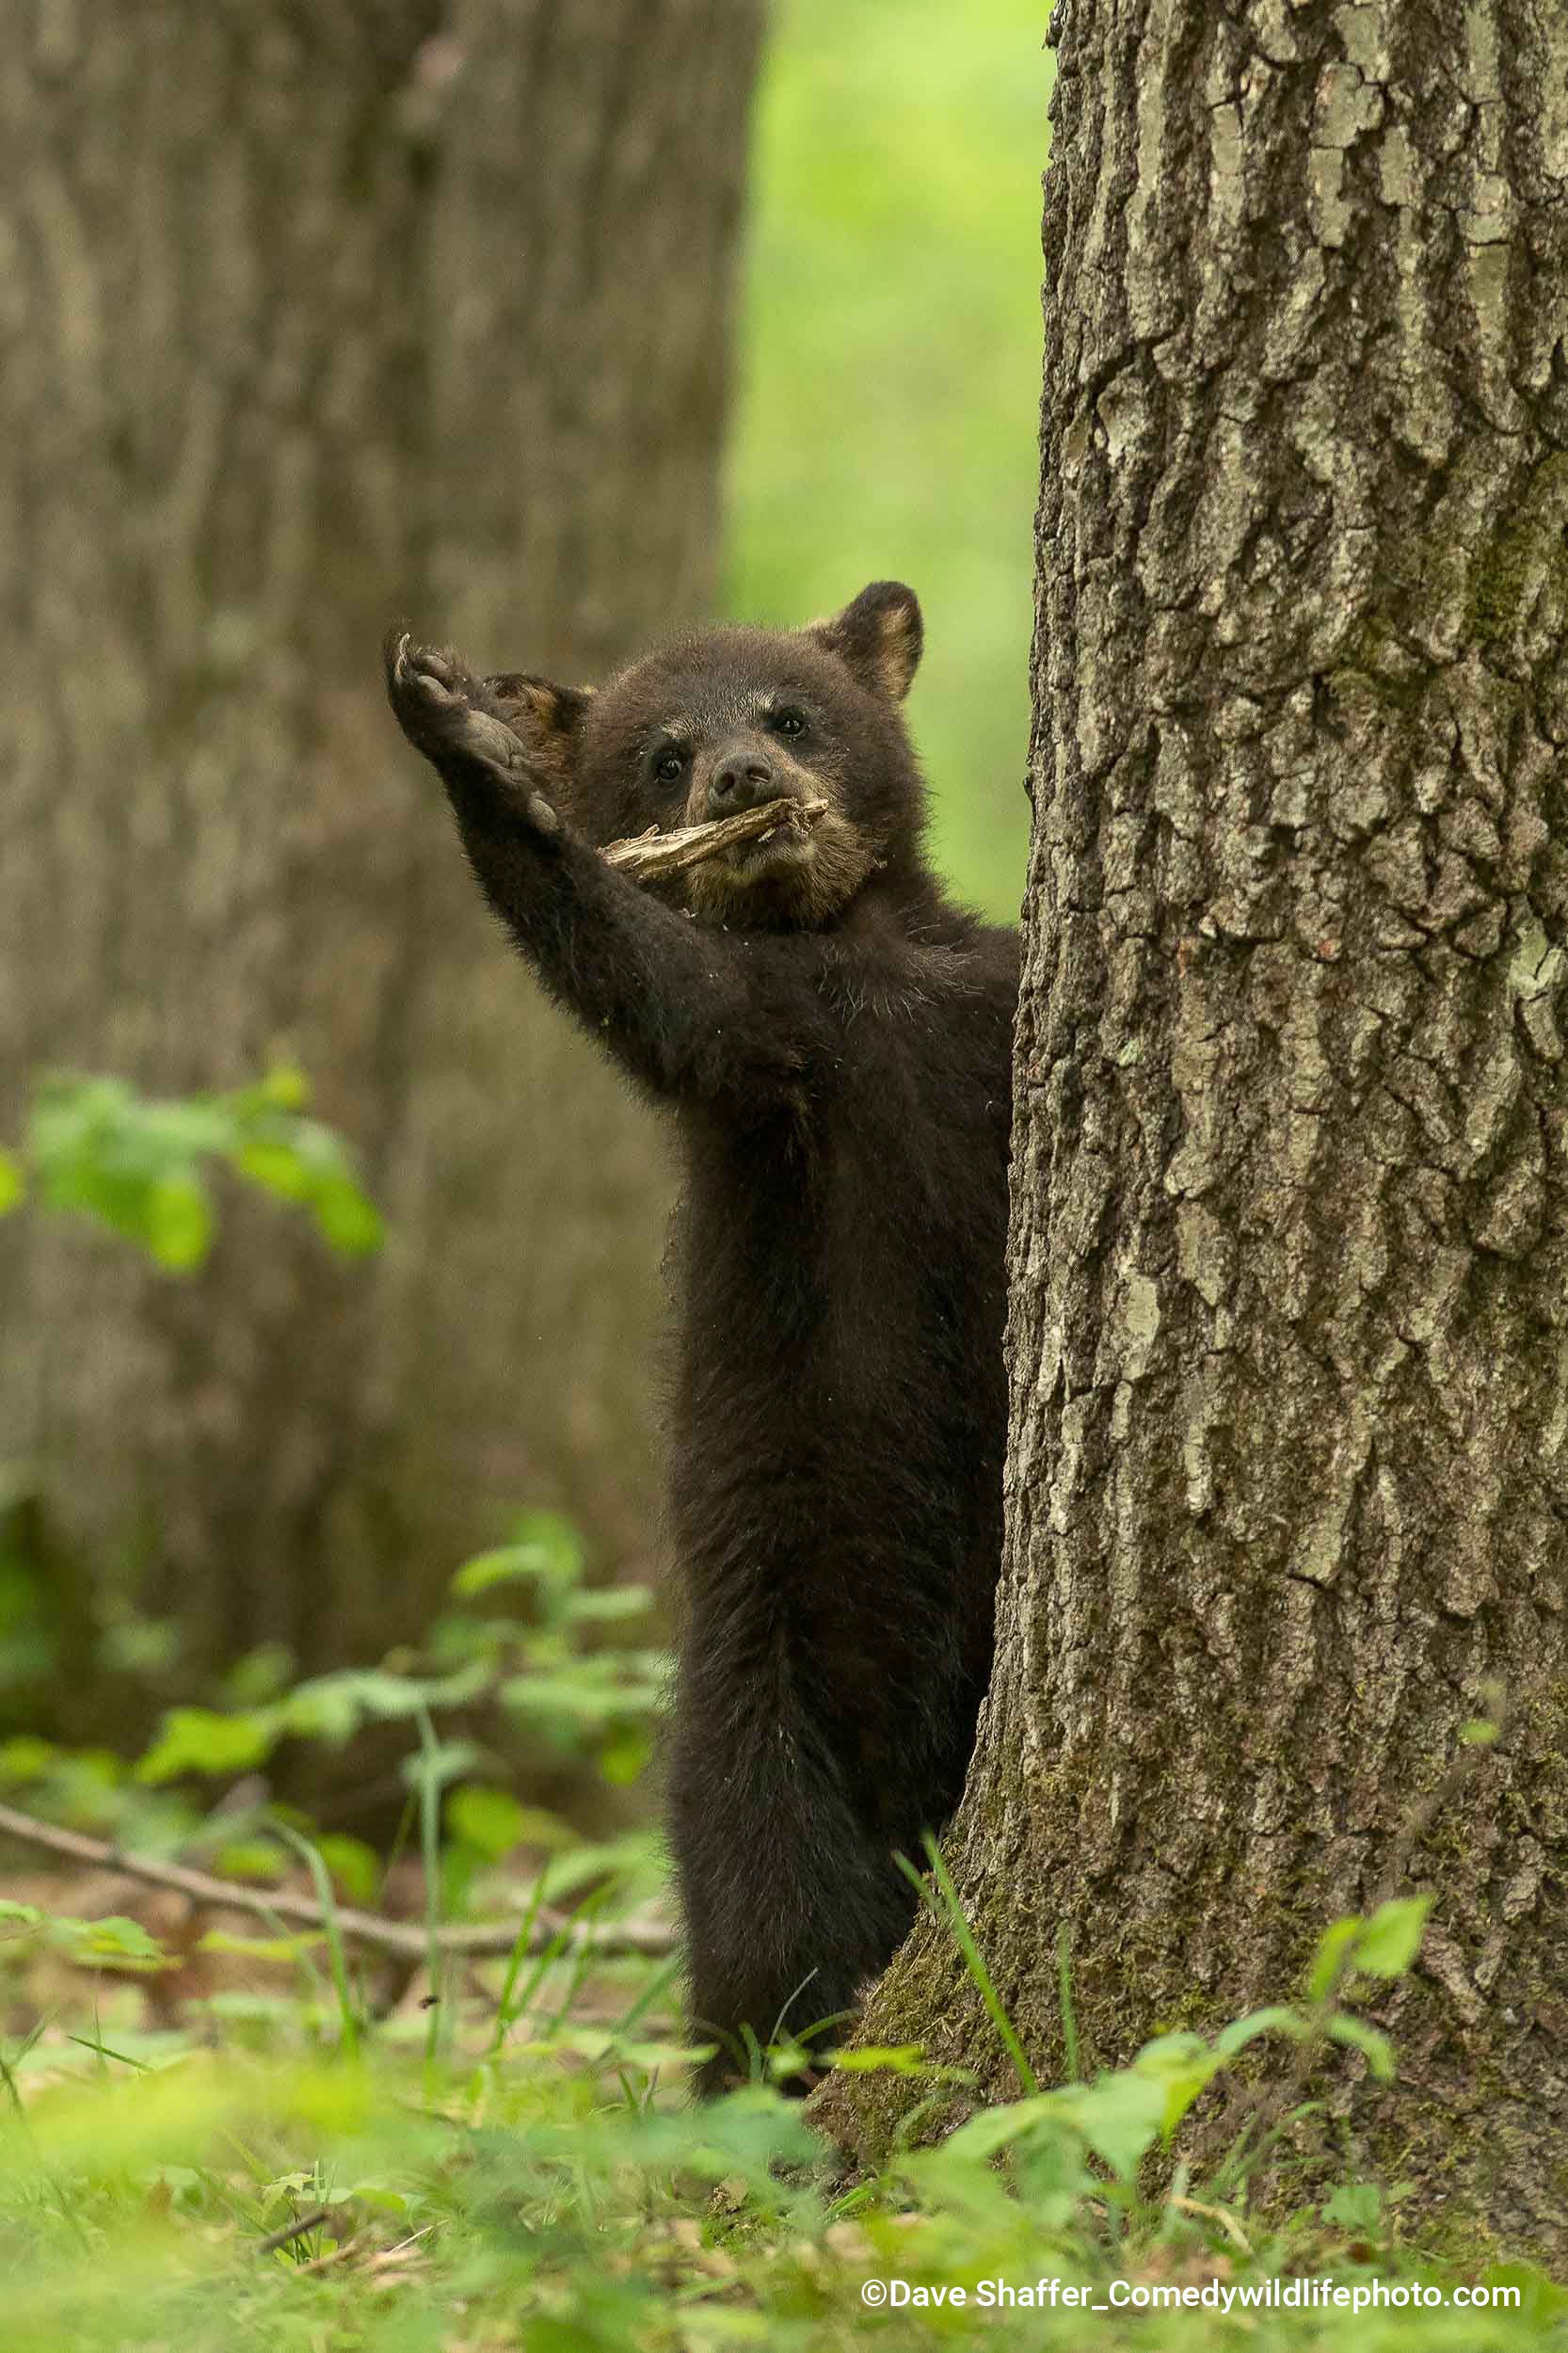 A black bear cub waves goodbye from behind a tree trunk. (Photo: © Dave Shaffer / Comedywildlifephoto.com.)